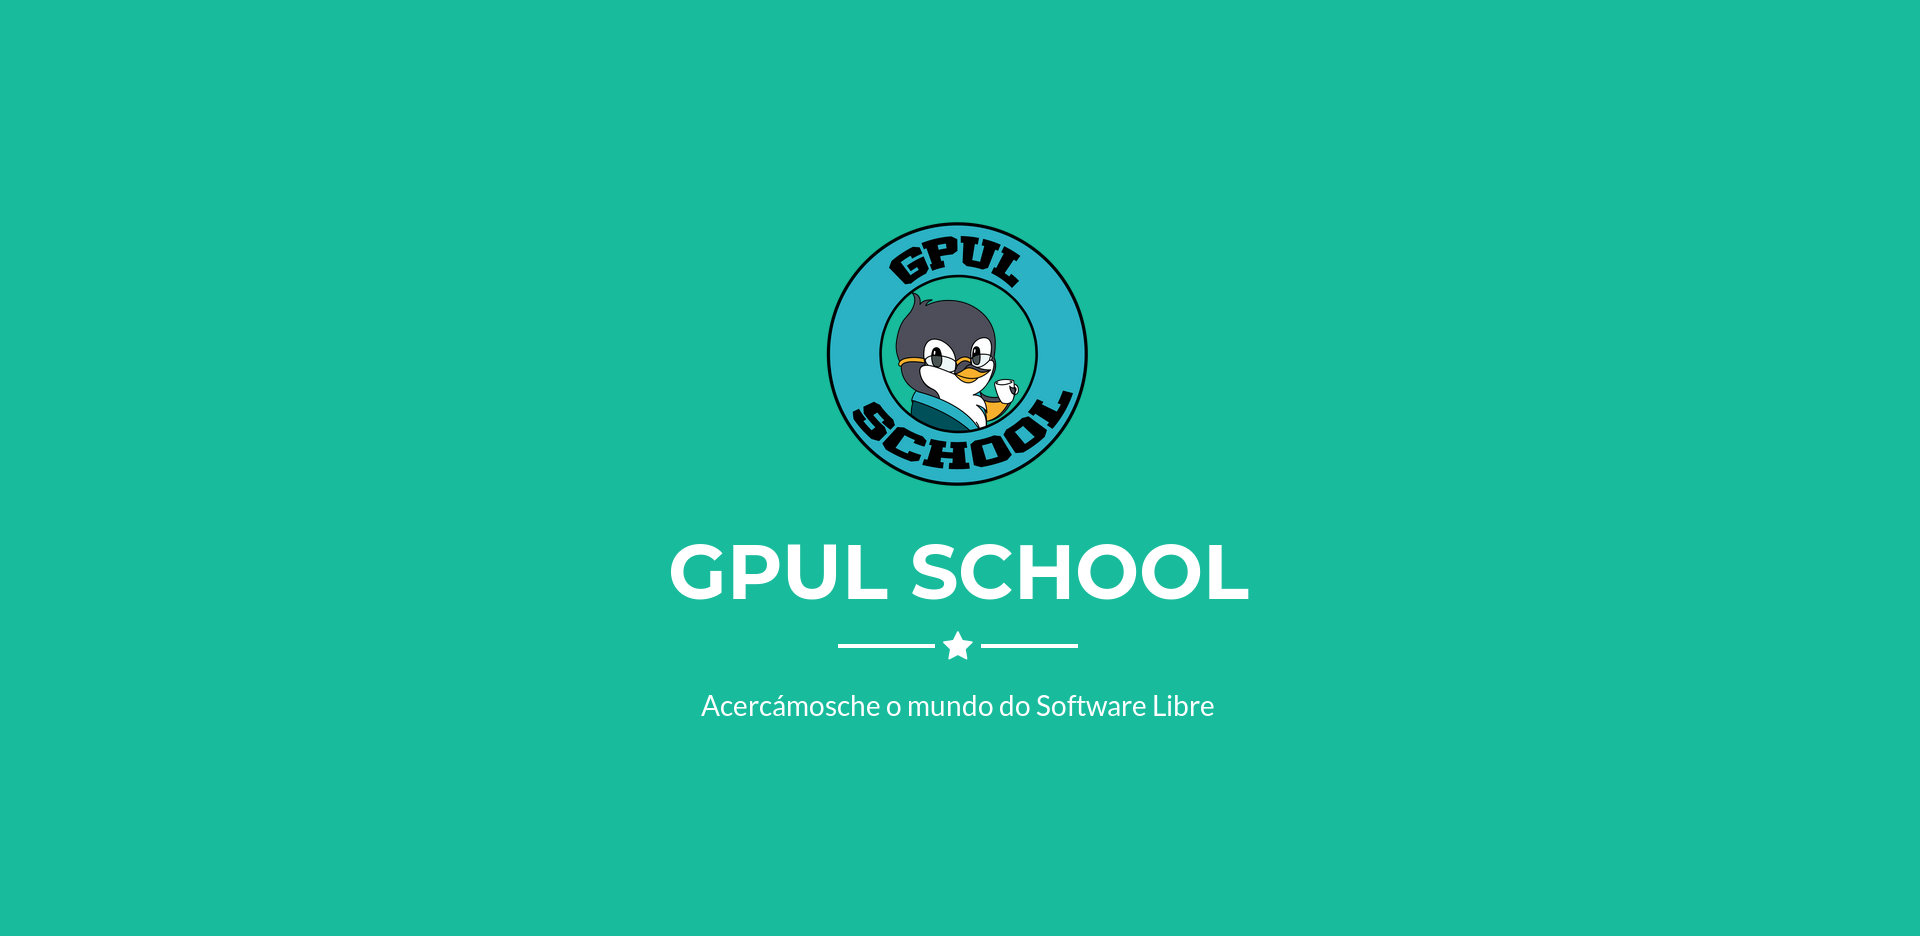 GPUL School